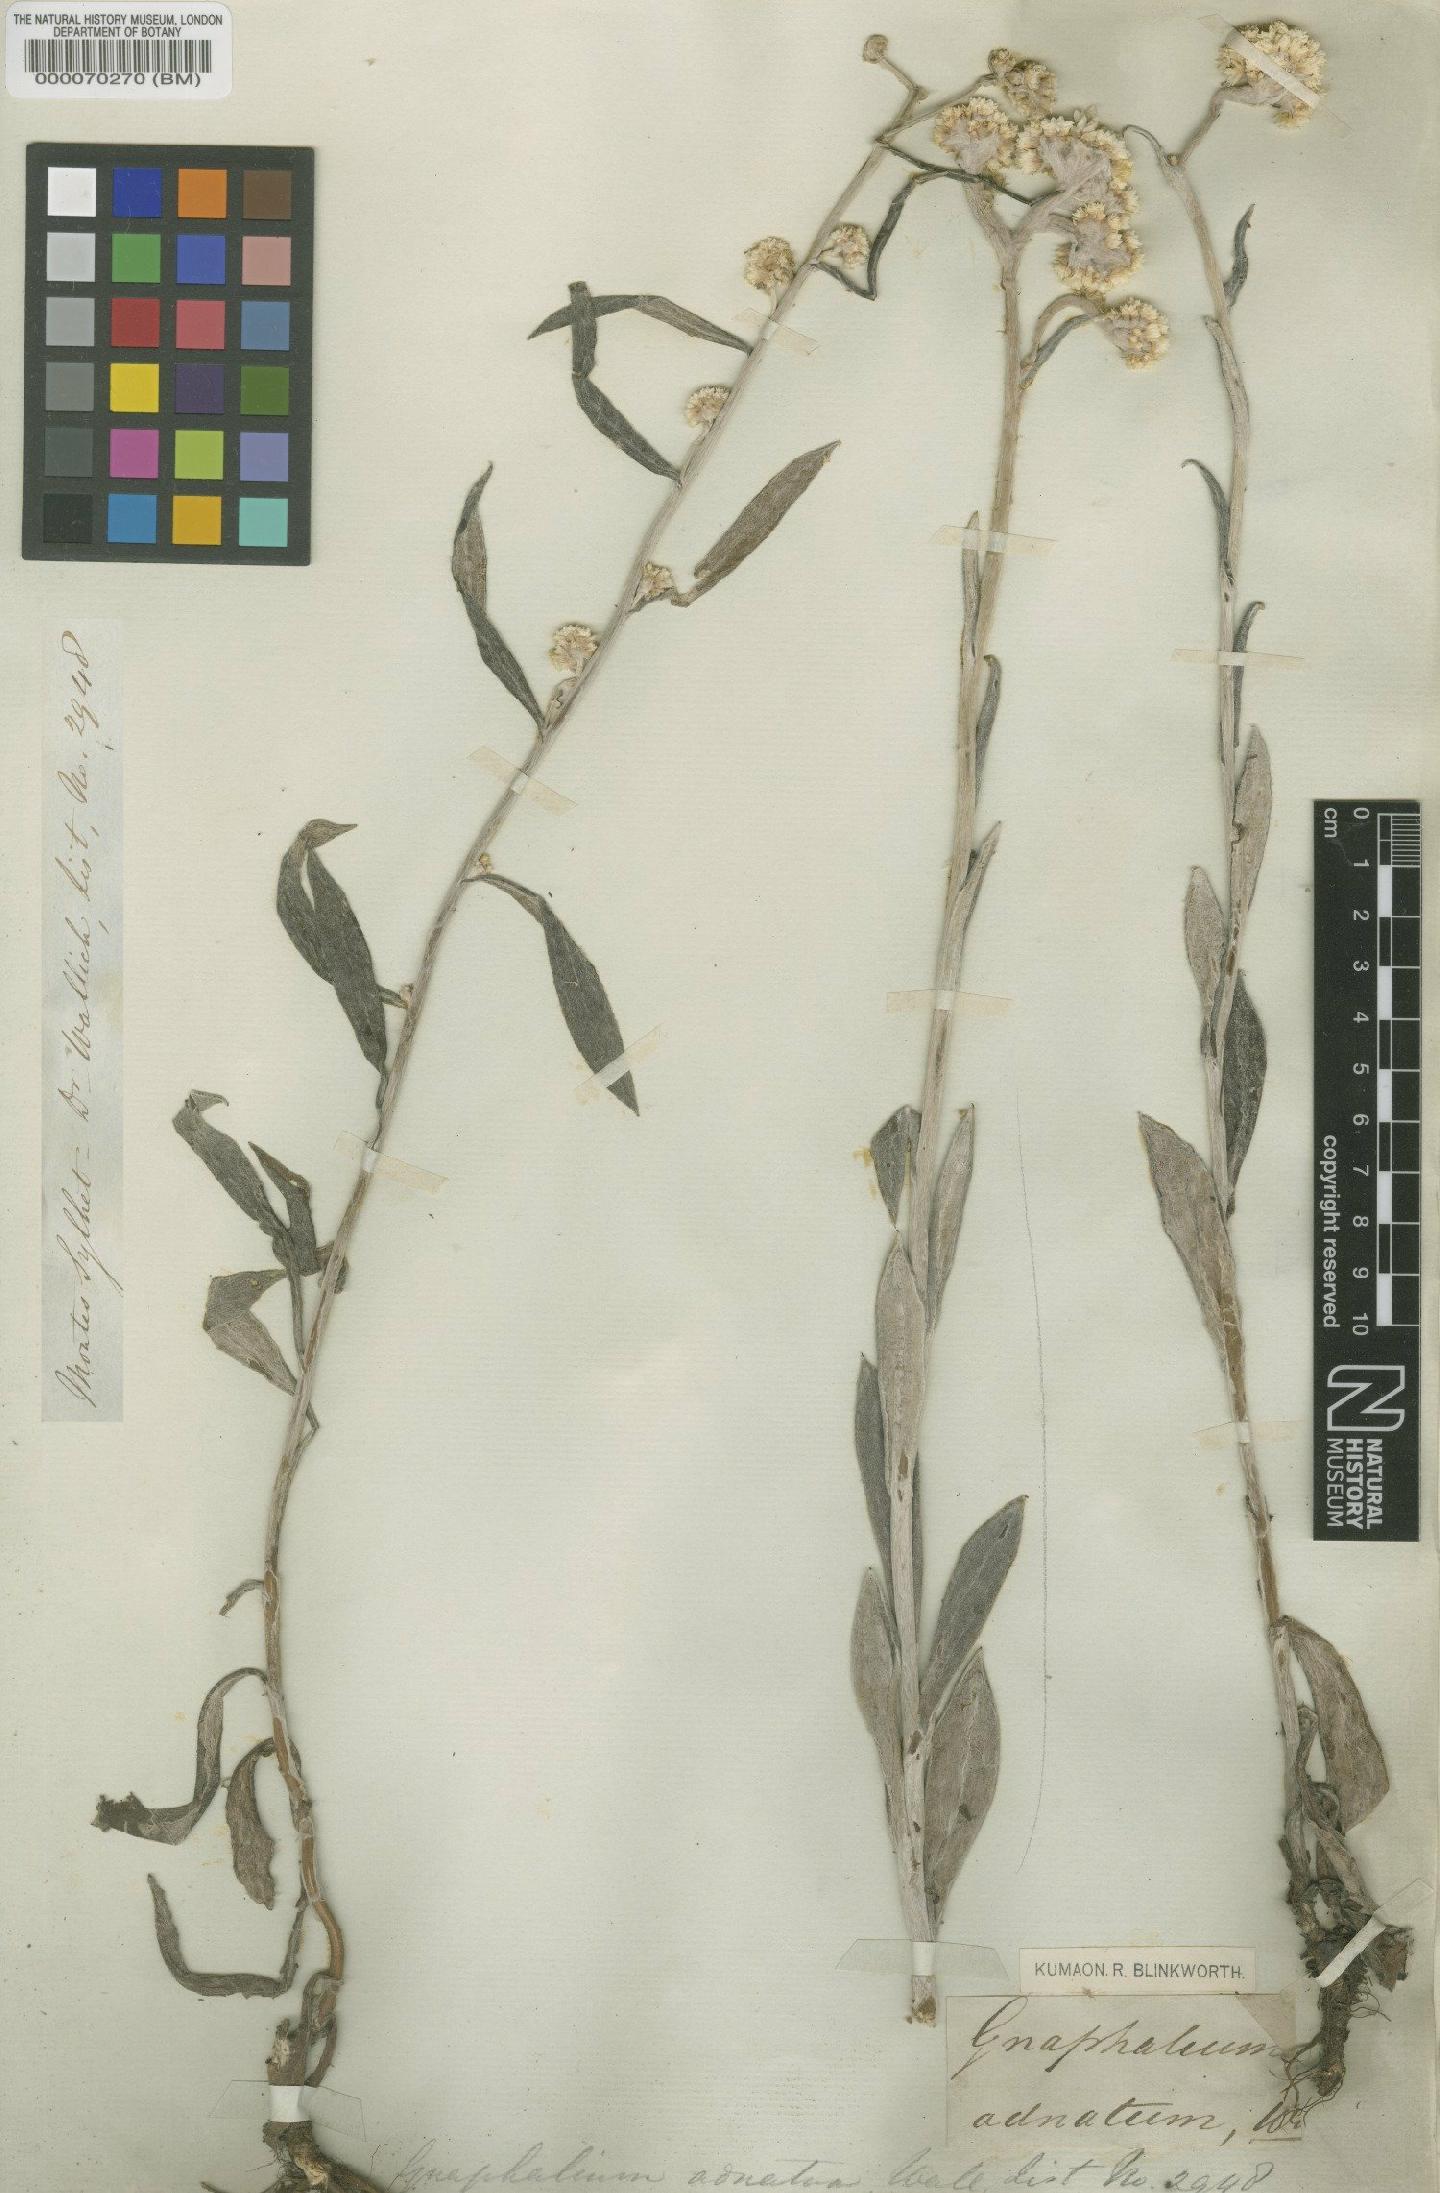 To NHMUK collection (Anaphalis adnata Wall. ex DC.; Type; NHMUK:ecatalogue:472889)